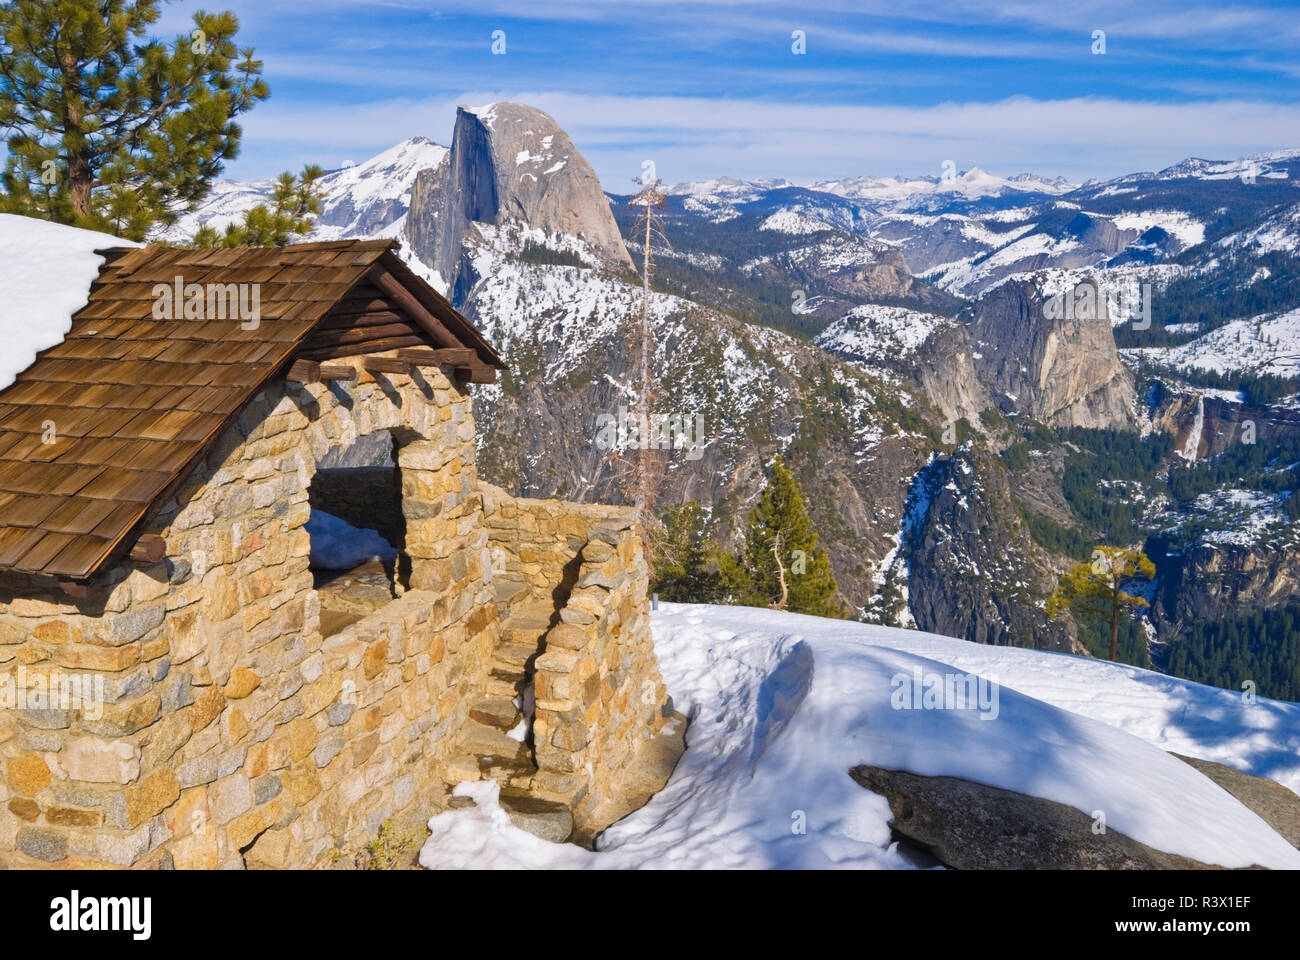 The Glacier Point hut and Half Dome, Yosemite National Park, California, USA Stock Photo